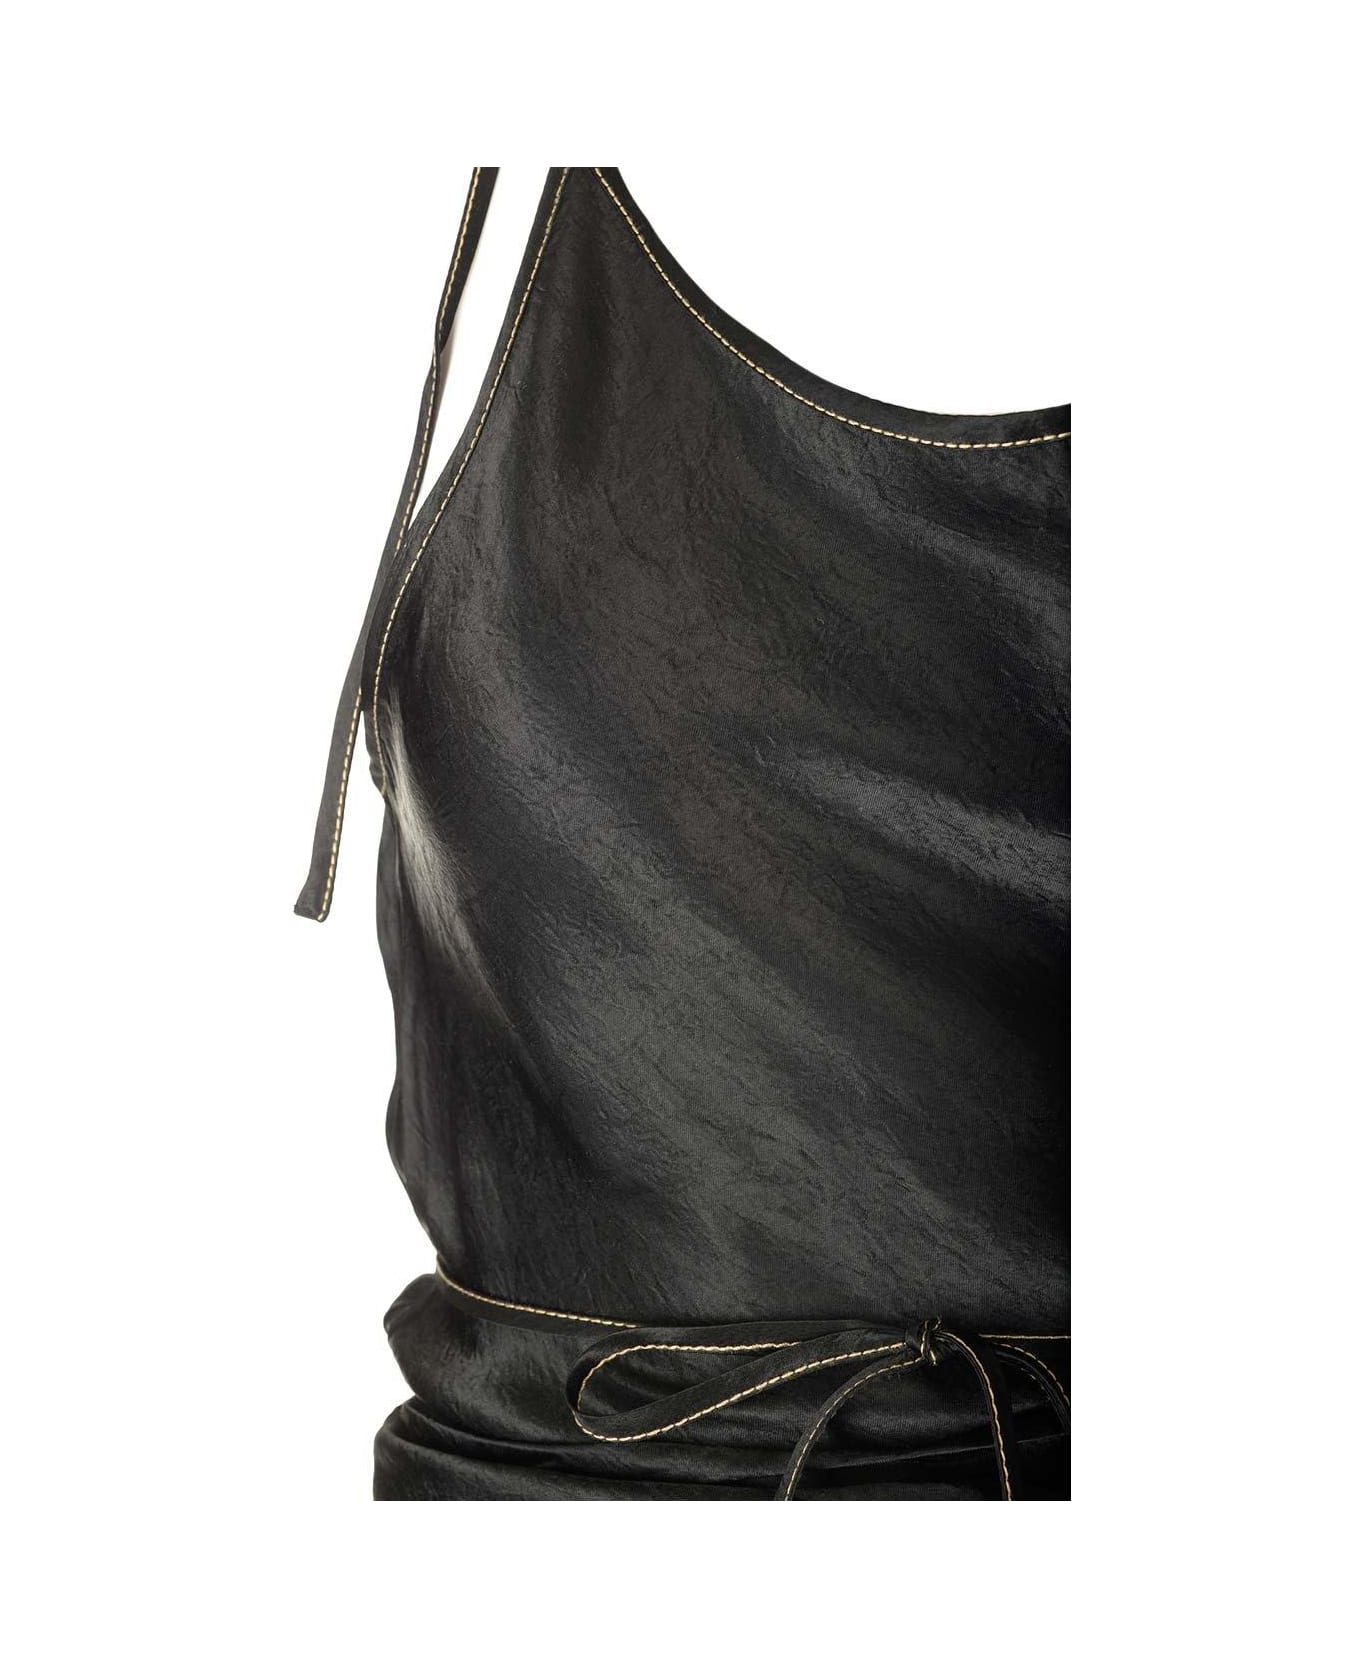 Acne Studios Sleeveless Wrap Detailed Maxi Dress - Black